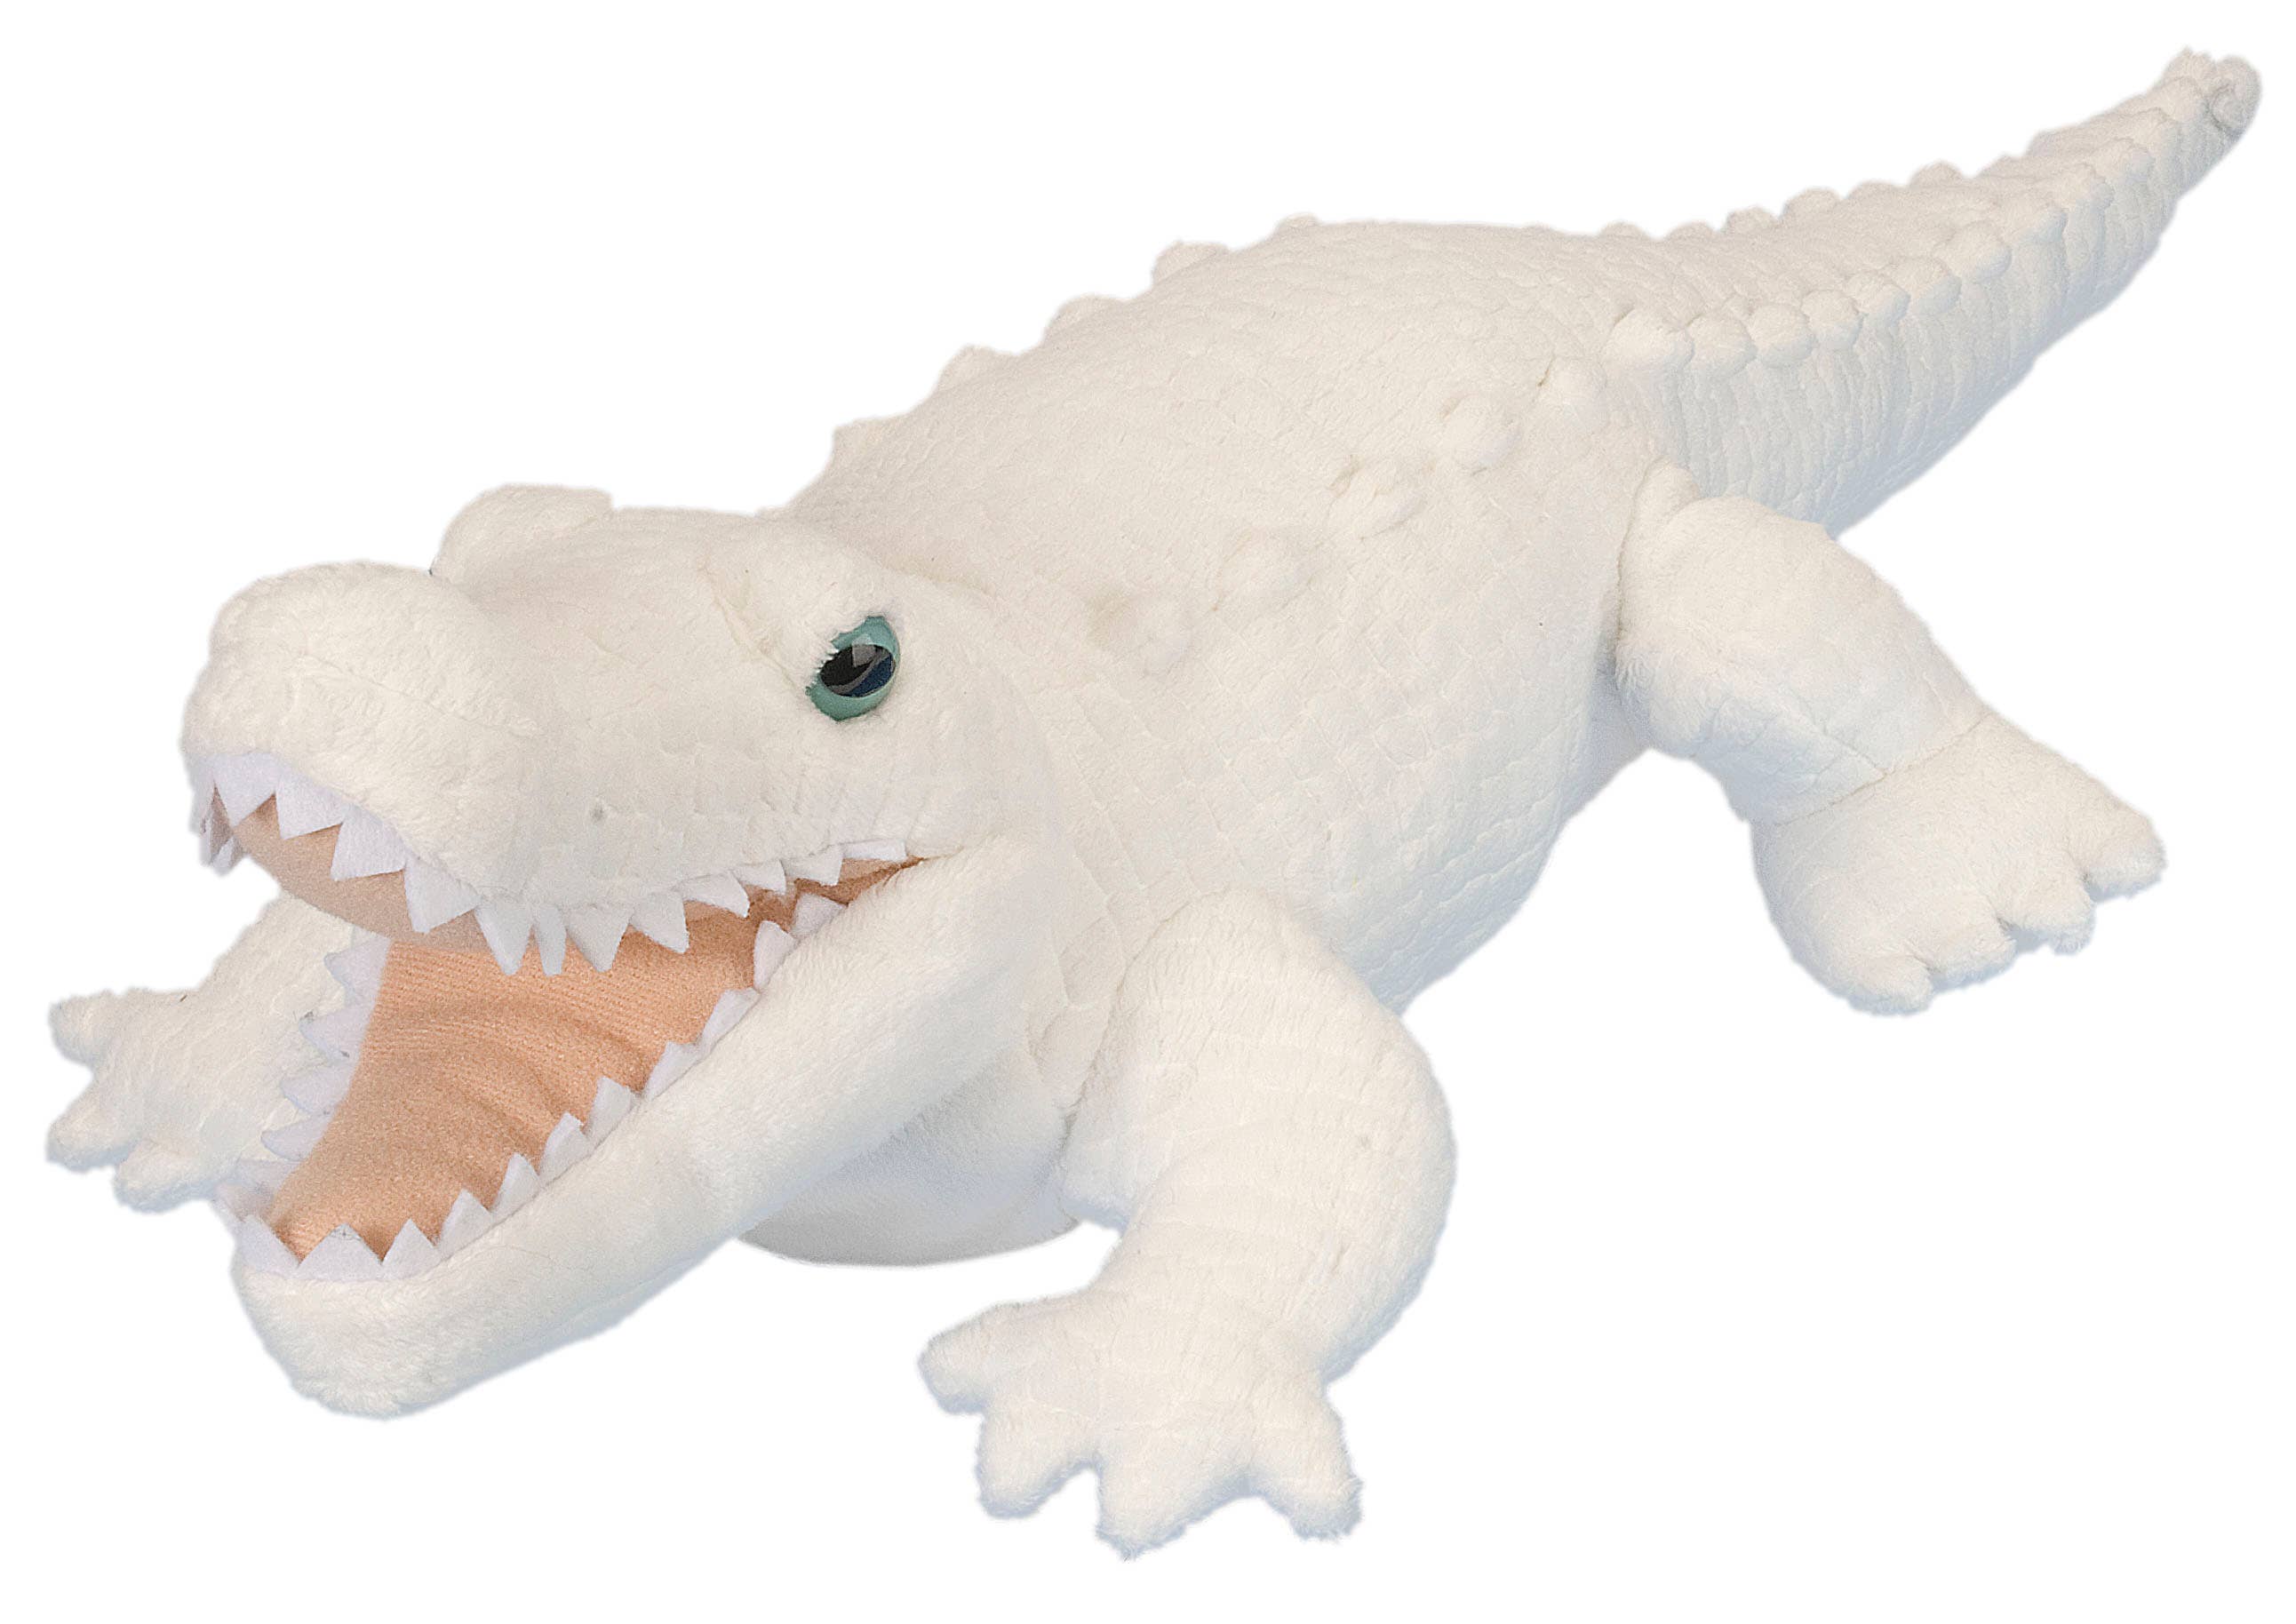 Realistic White Alligator Stuffed Animal - 12"